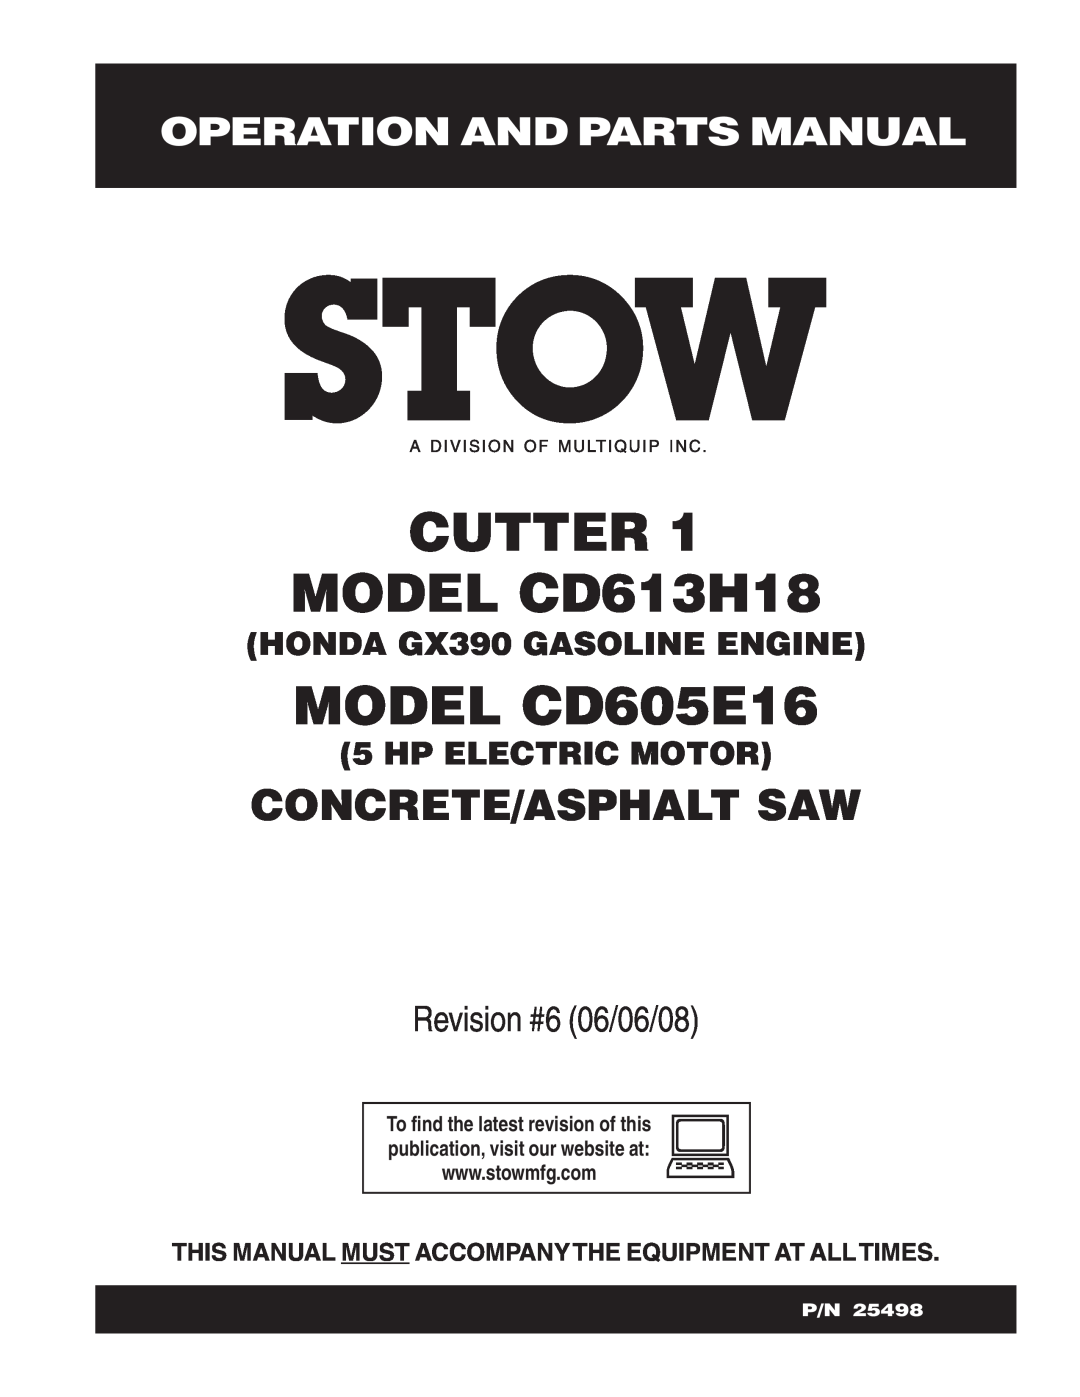 Multiquip CD613H18 (Honda GX390 Gasoline Engine) manual Operation And Parts Manual, CUTTER MODEL CD613H18, MODEL CD605E16 